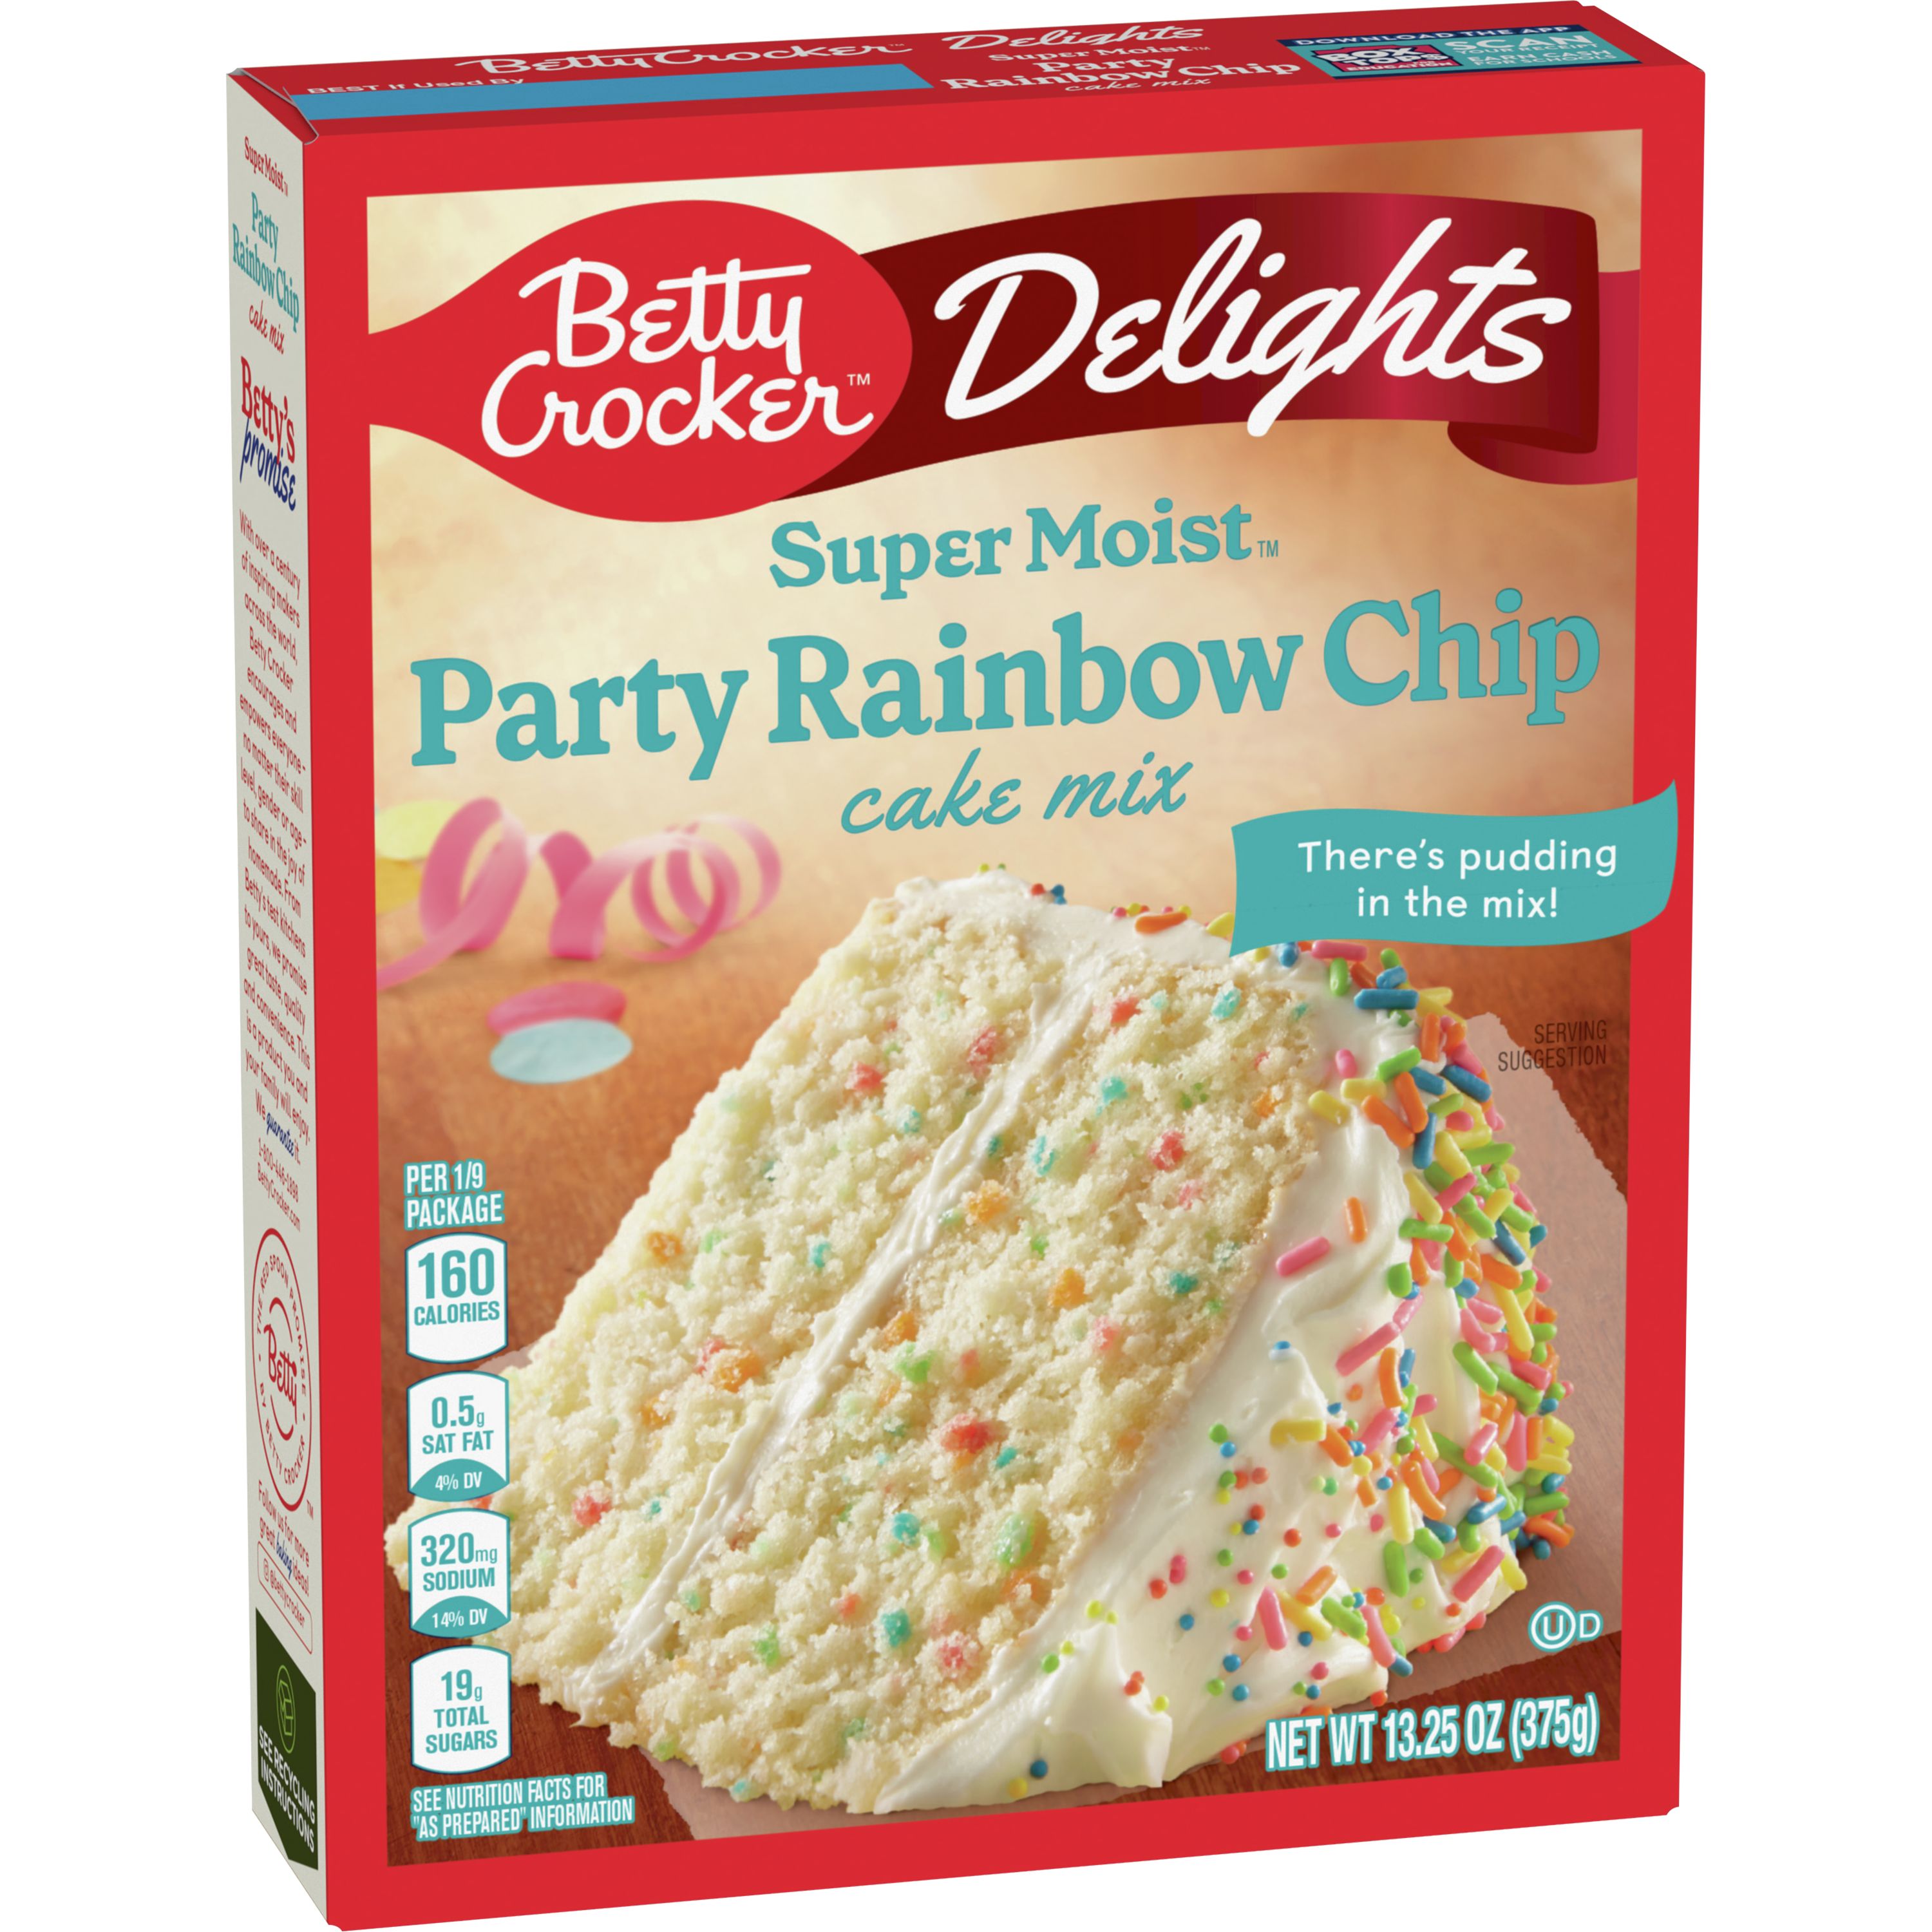 Rainbow Birthday Cake Recipe from Scratch - MakeBetterFood.com